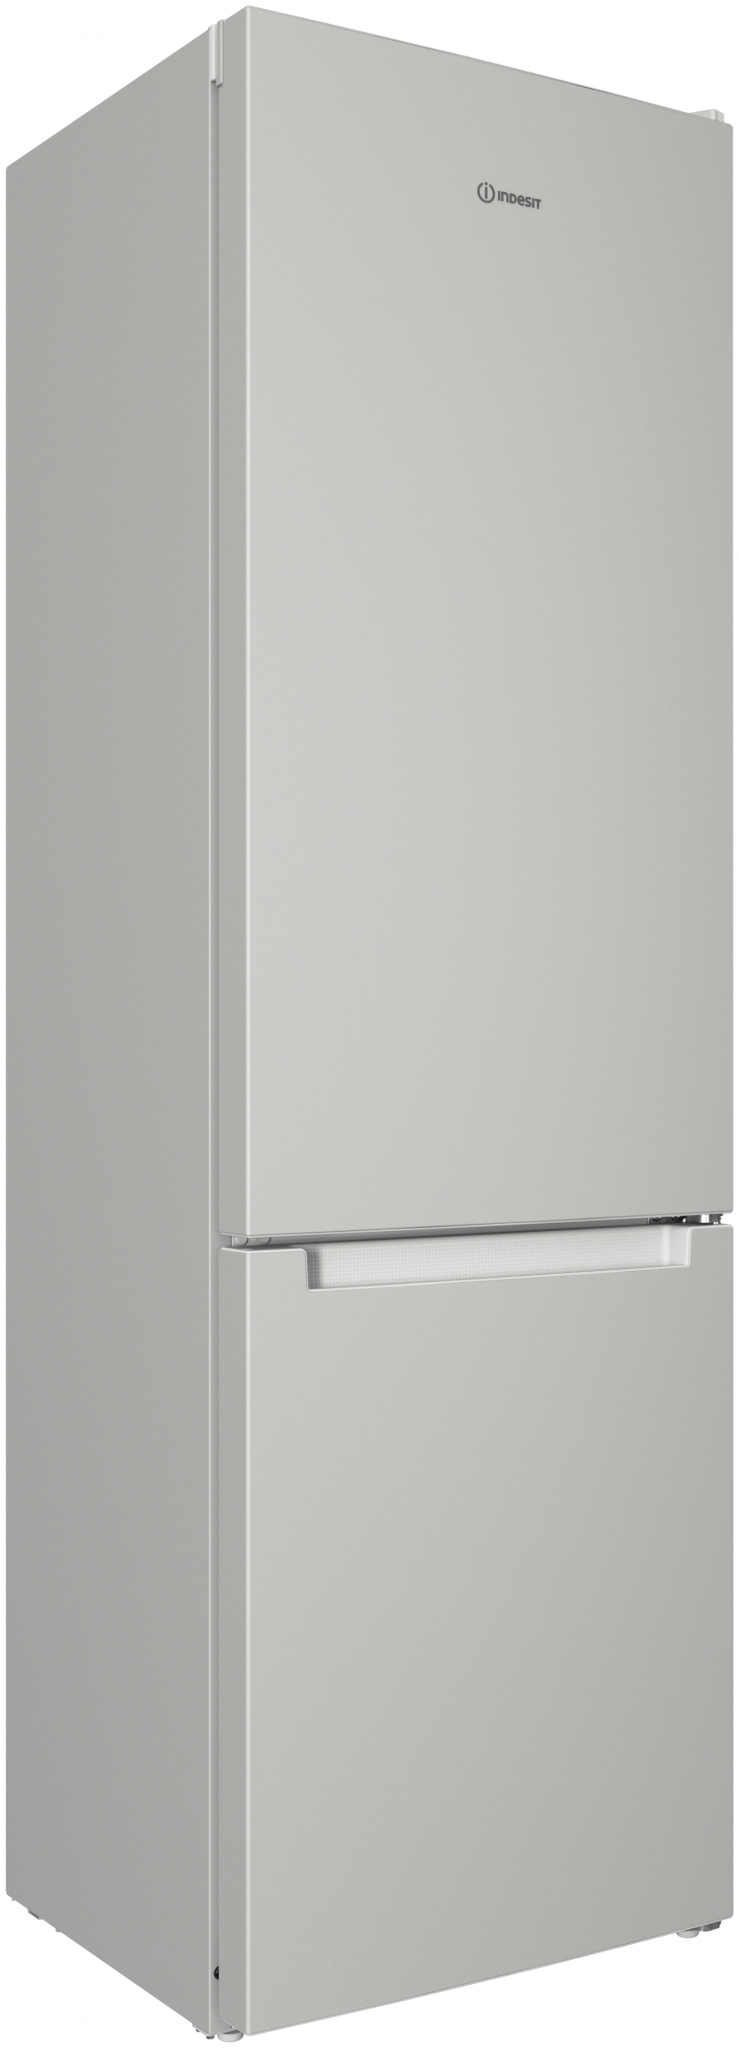 Холодильник hotpoint ariston hts 7200. Холодильник Zarget ZRB 360ds1im. Холодильник Zarget ZRB 310ns1im. Холодильник Haier cef535awg. Холодильник Shivaki SHRF-335ds.